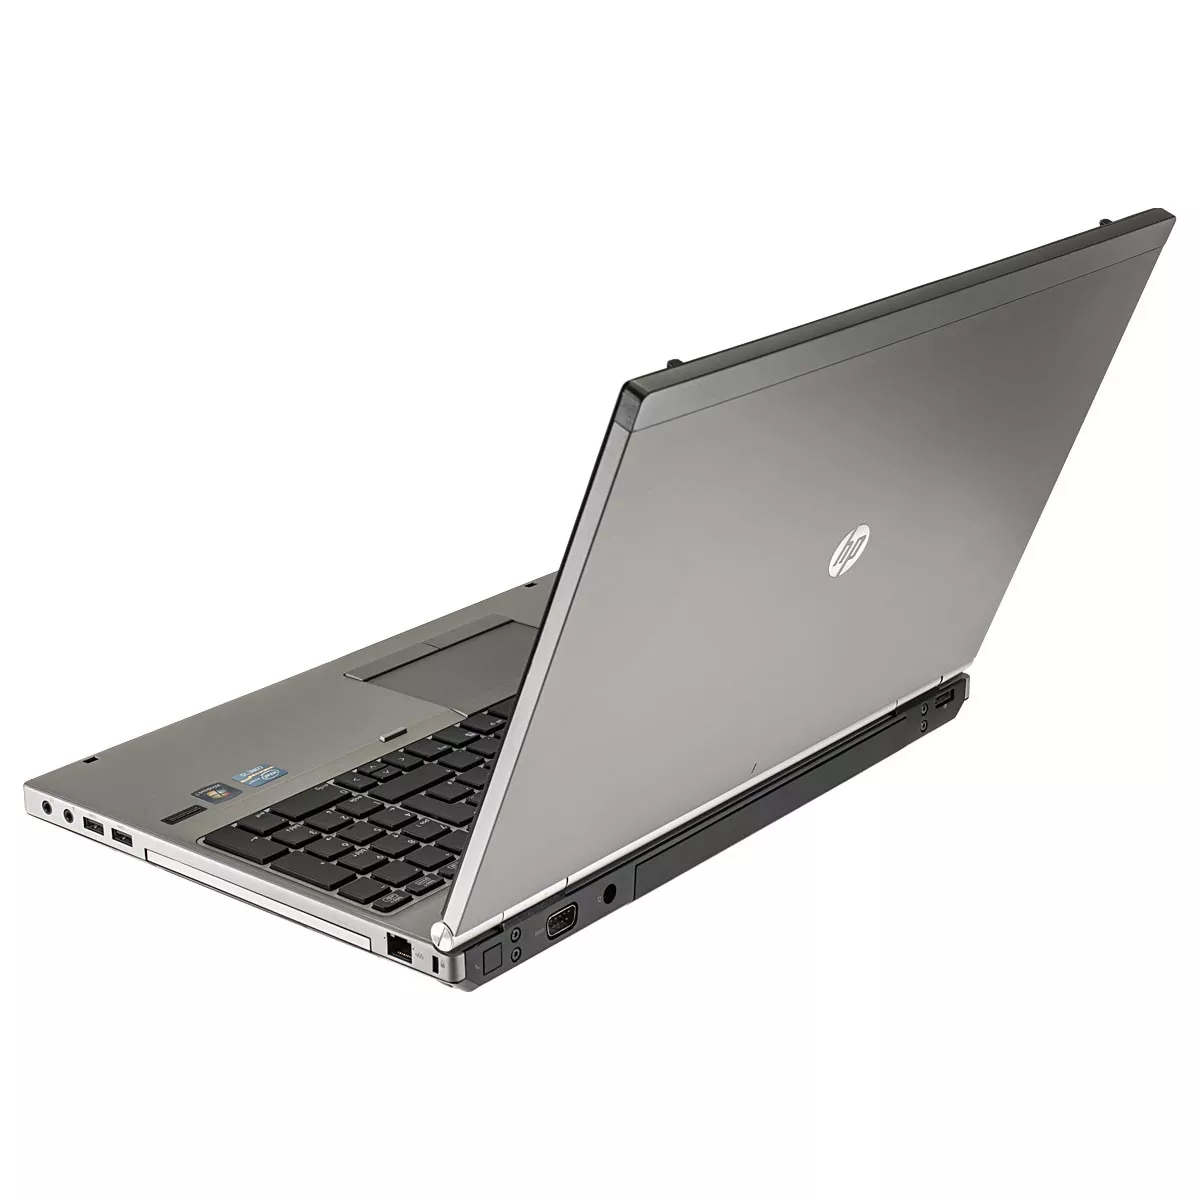 HP Elitebook 8560p Core i5 2540M 2,6 GHz Radeon HD 6470M Webcam